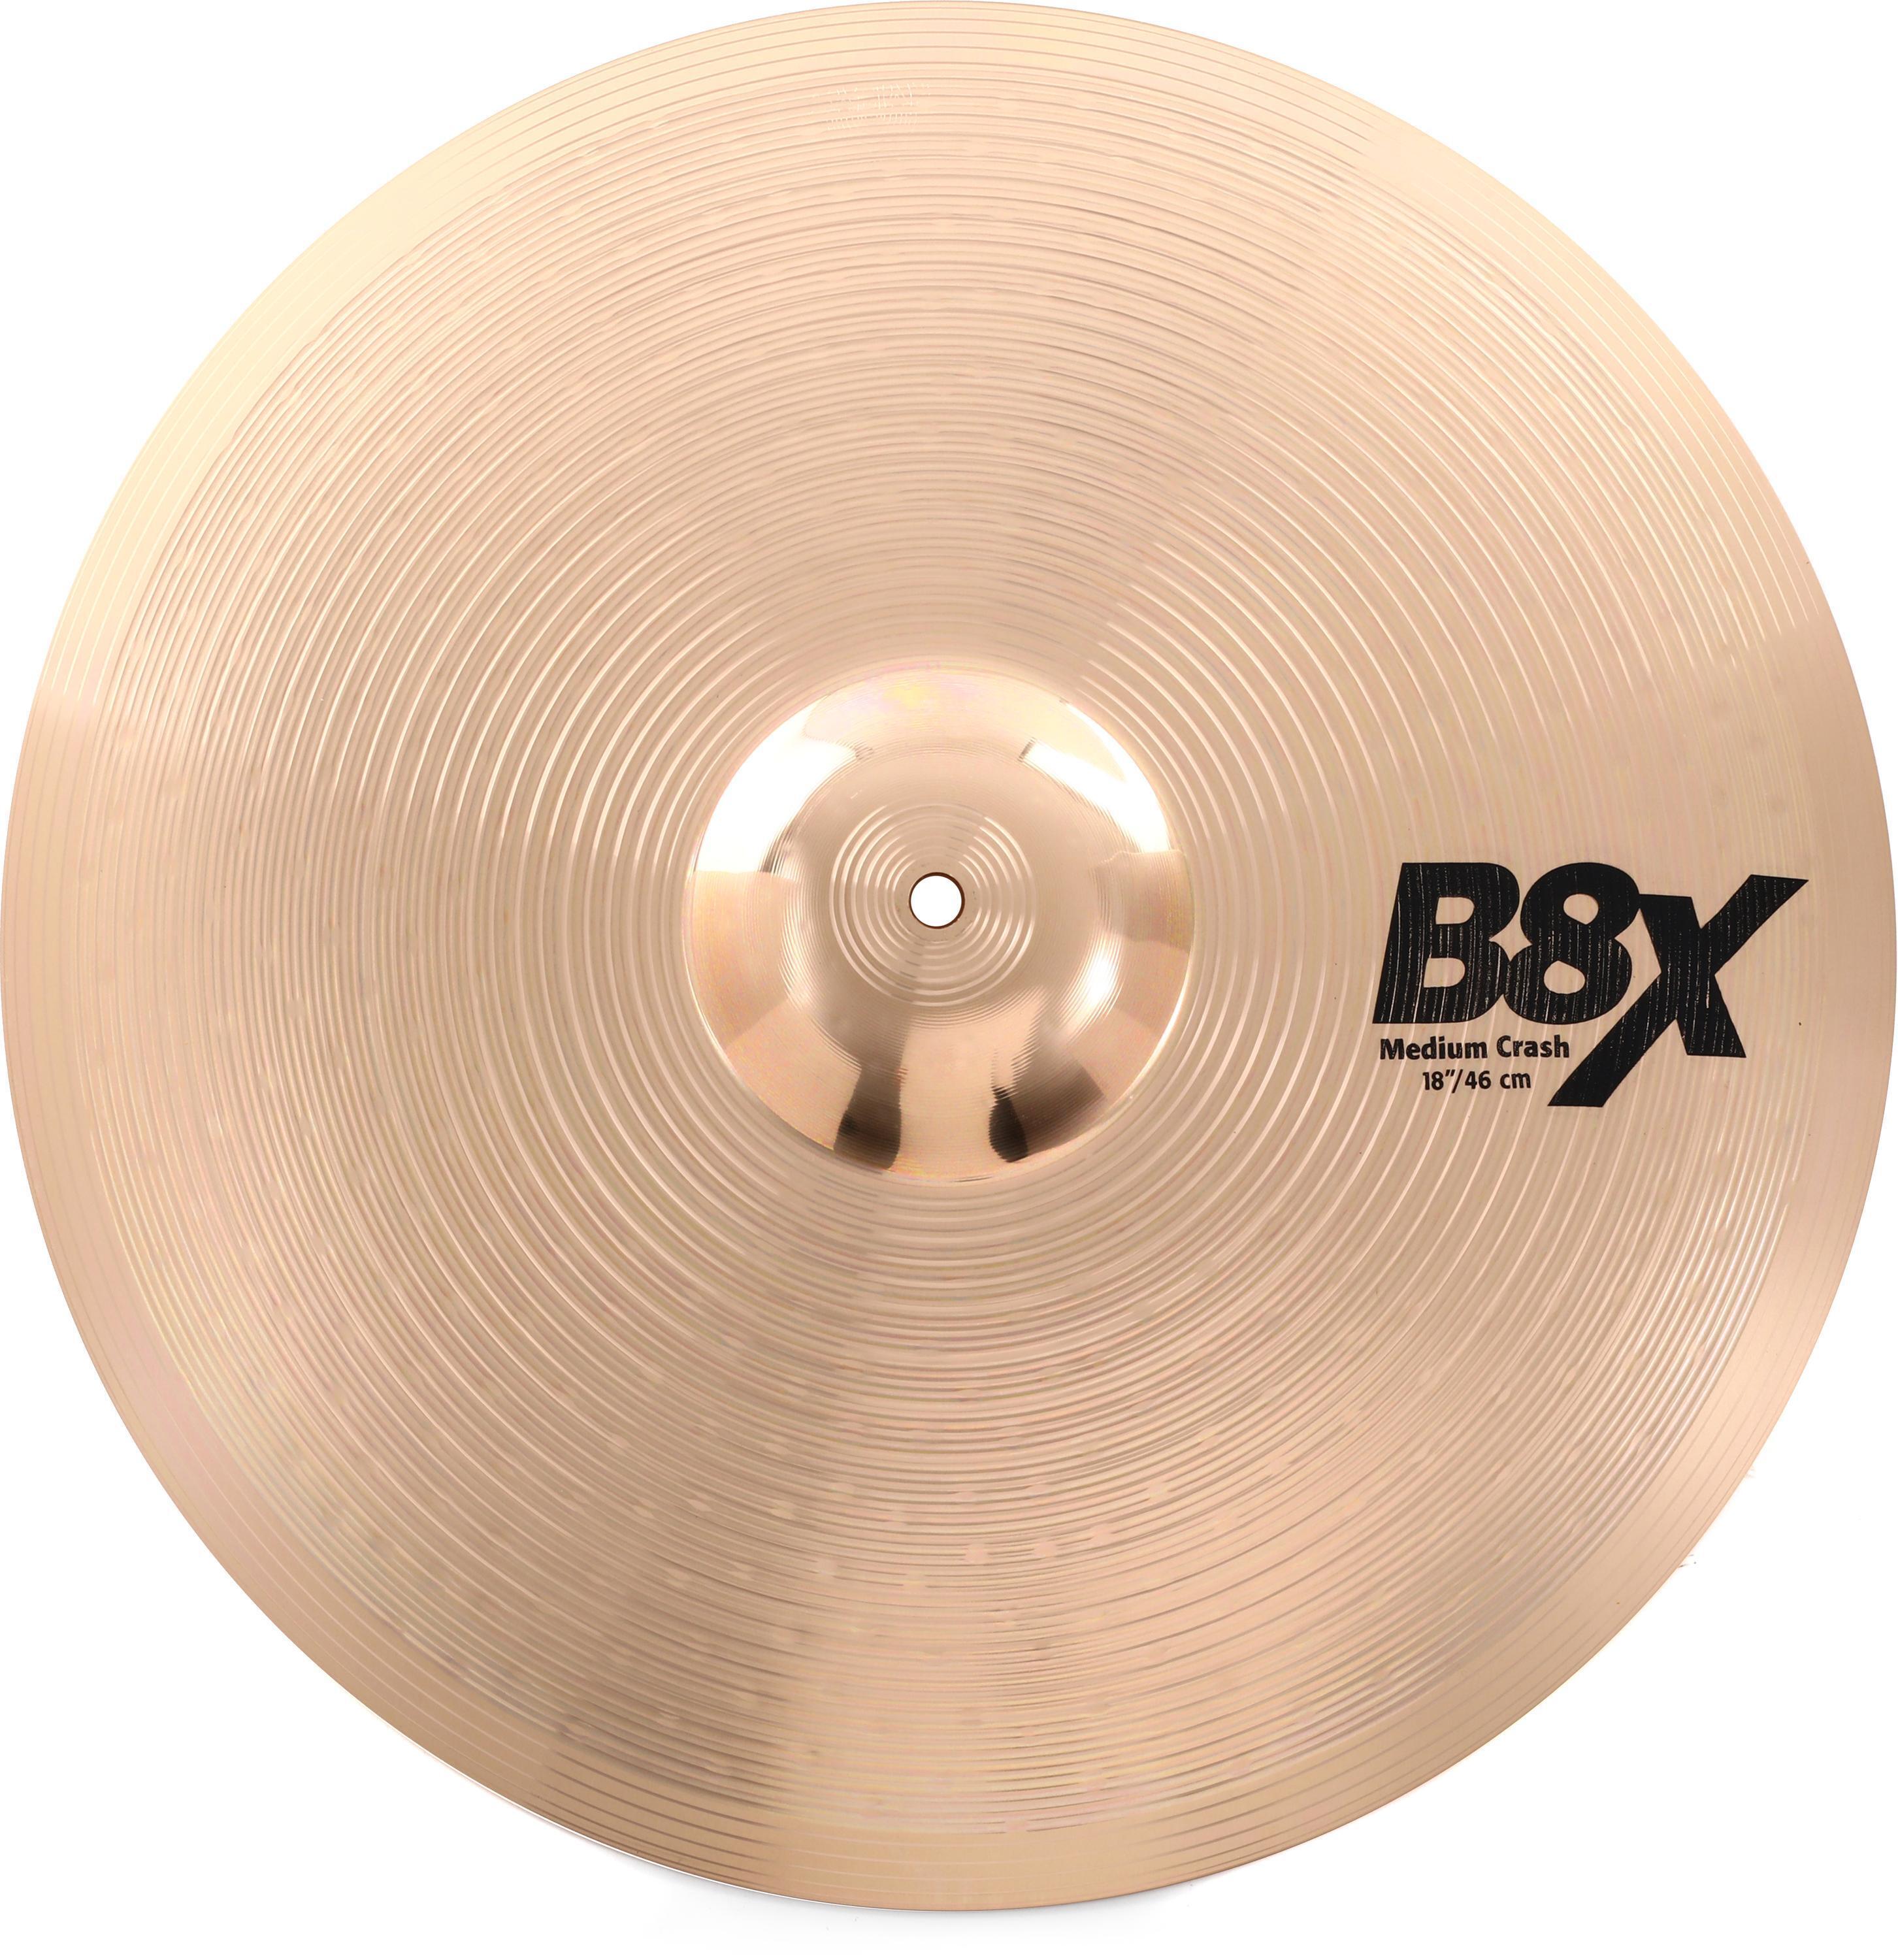 18 inch B8X Medium Crash Cymbal - Sweetwater